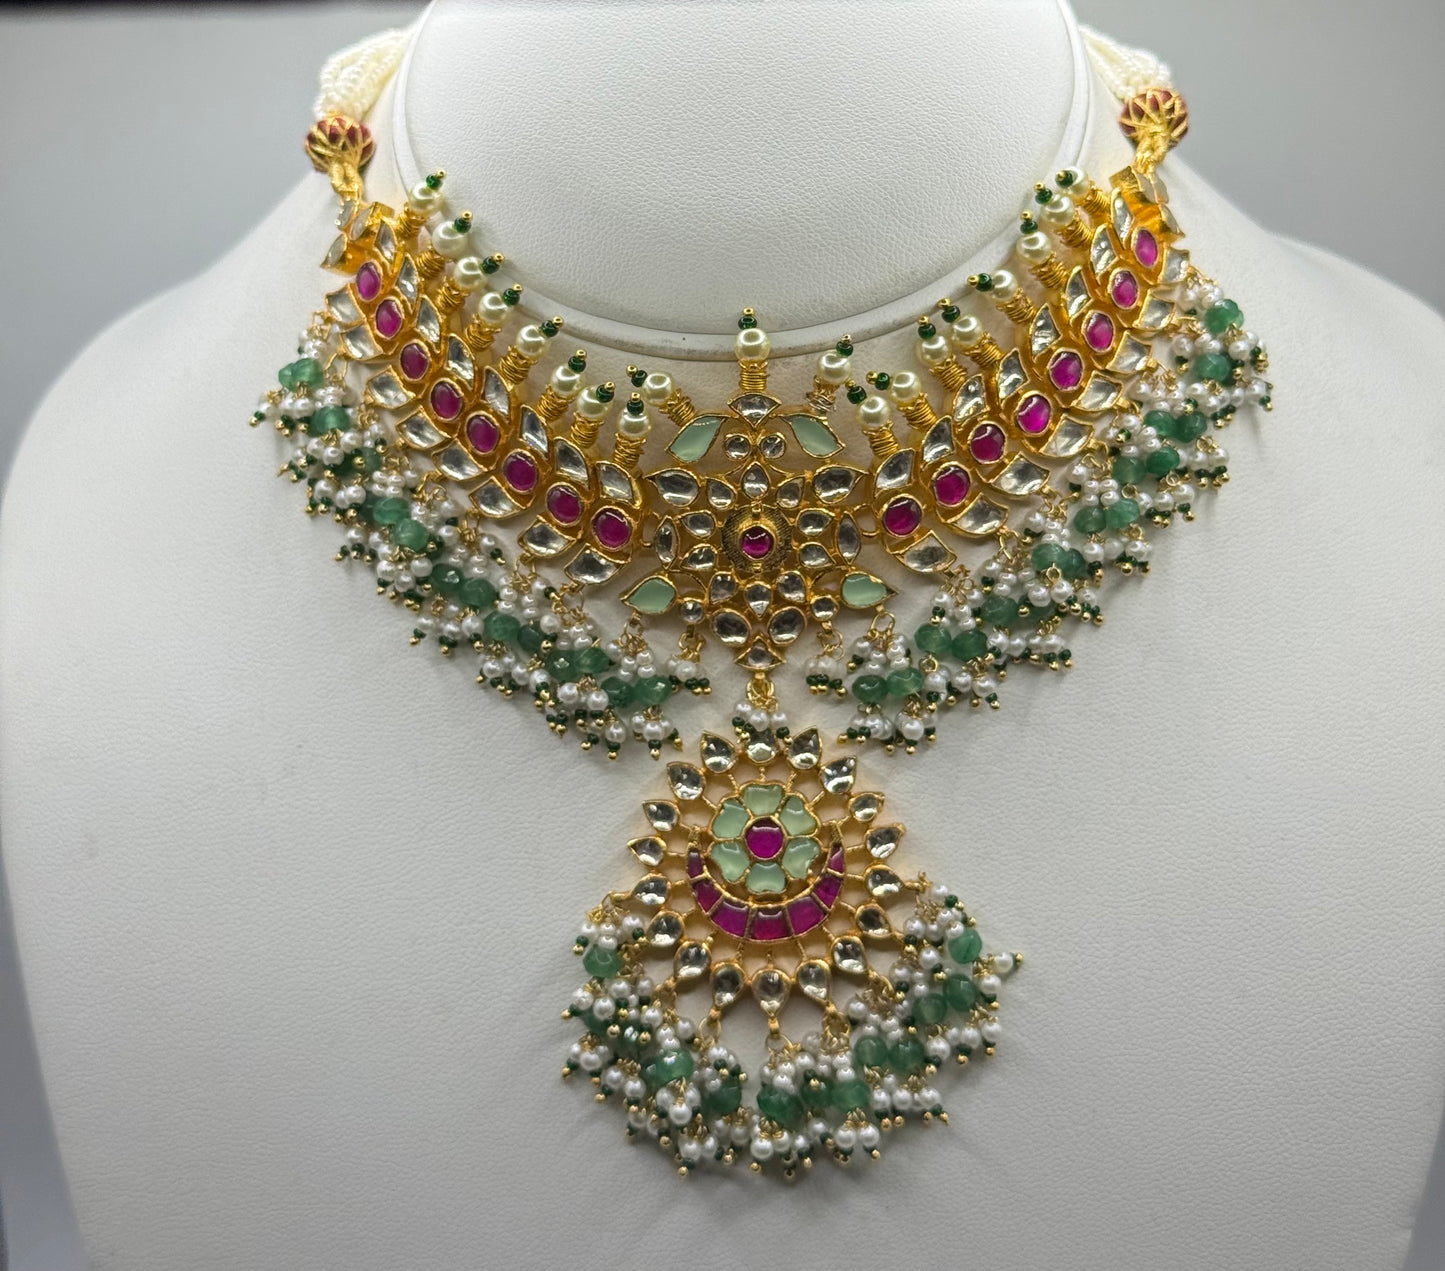 Diana kundan necklace set